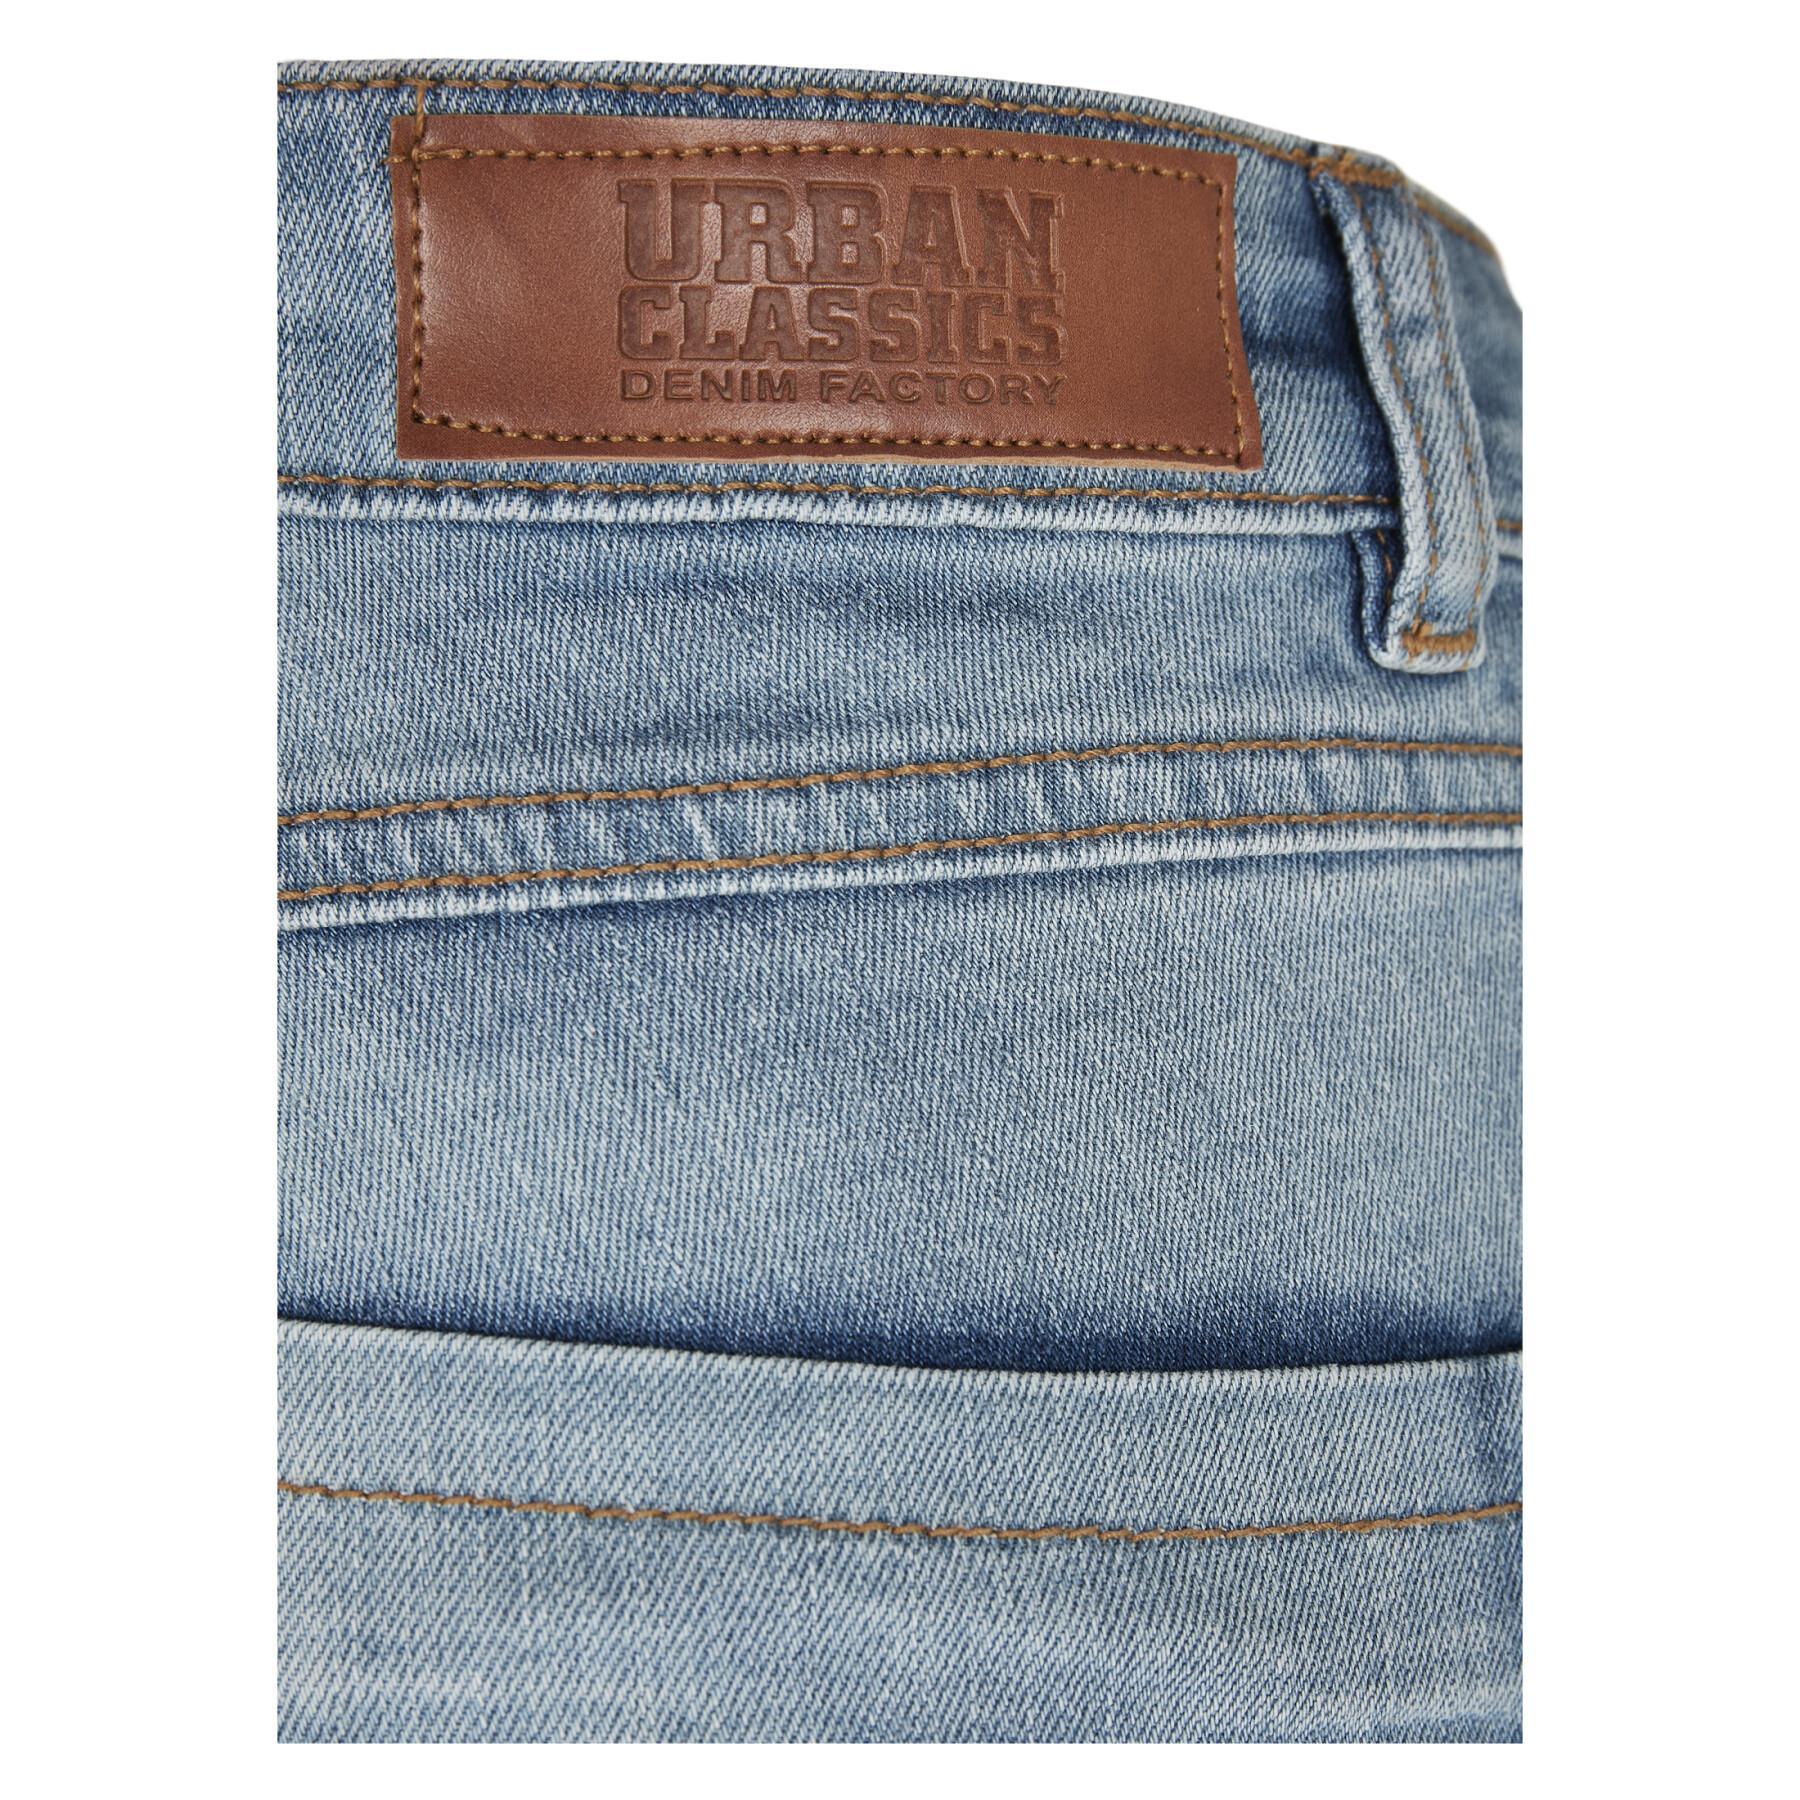 Women's jeans Urban Classics high waist flared